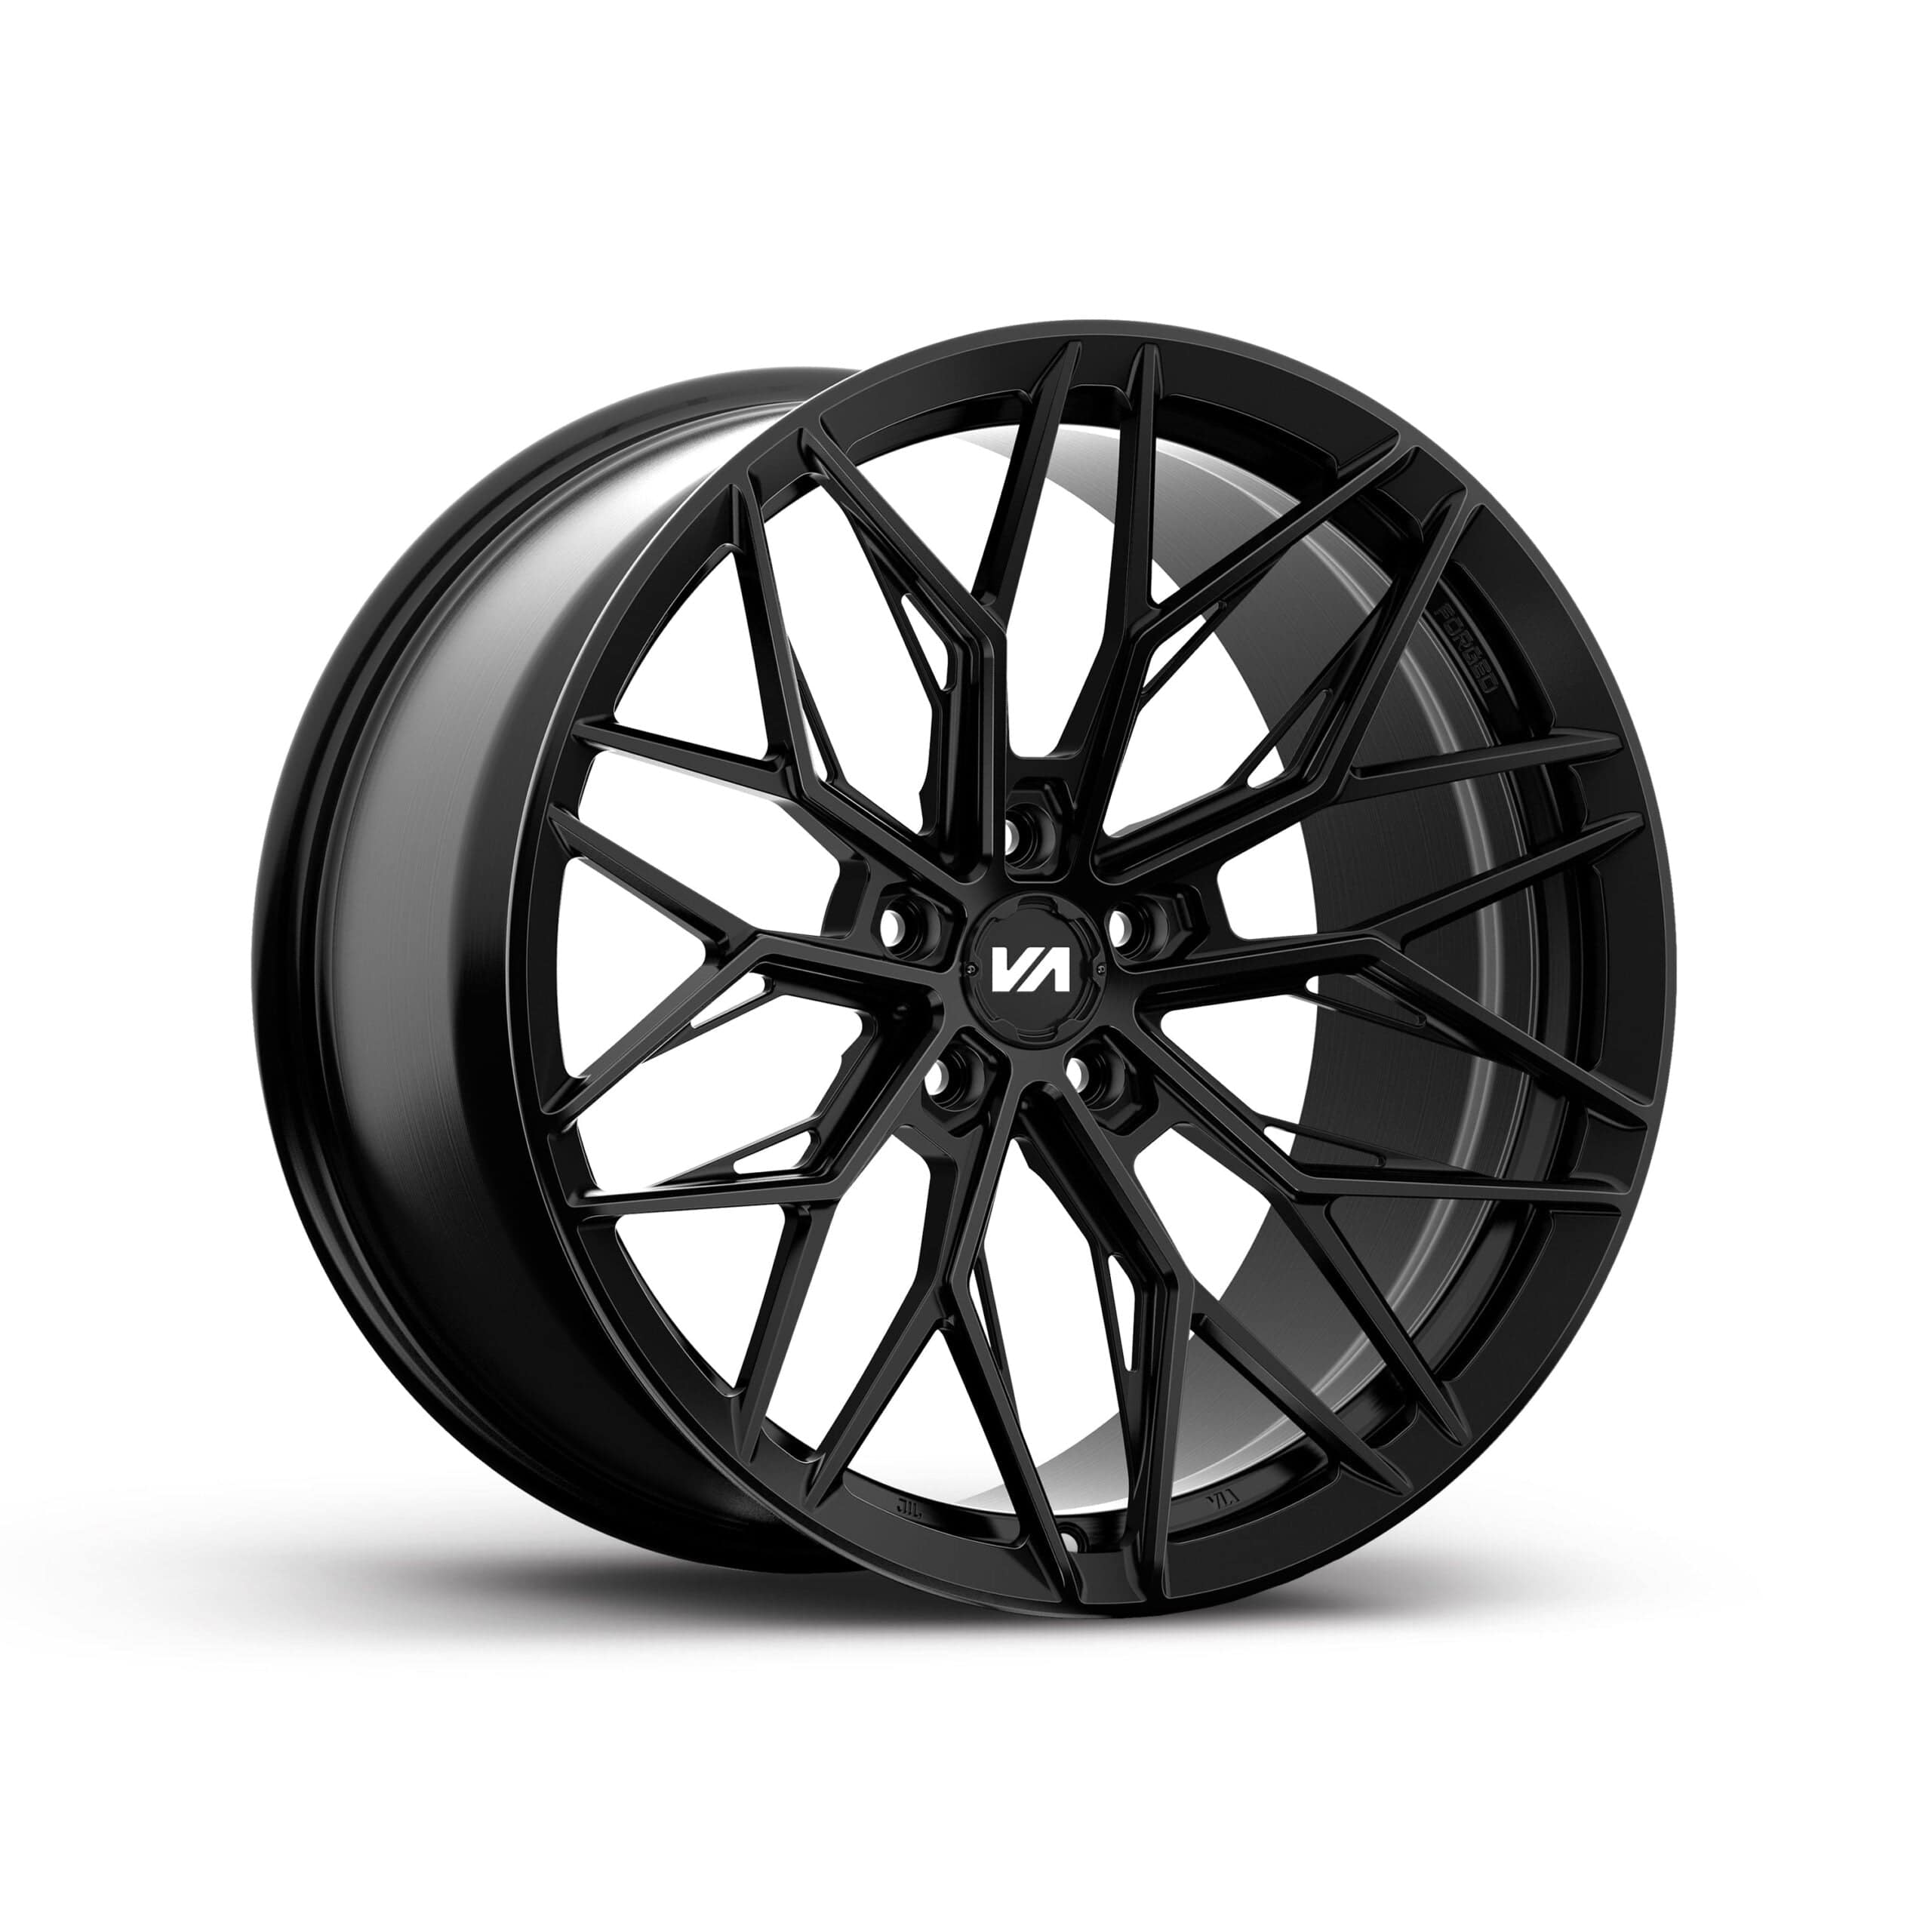 Kies-Motorsports Variant Variant™ Maxim Collection Alloy Wheels 20X11